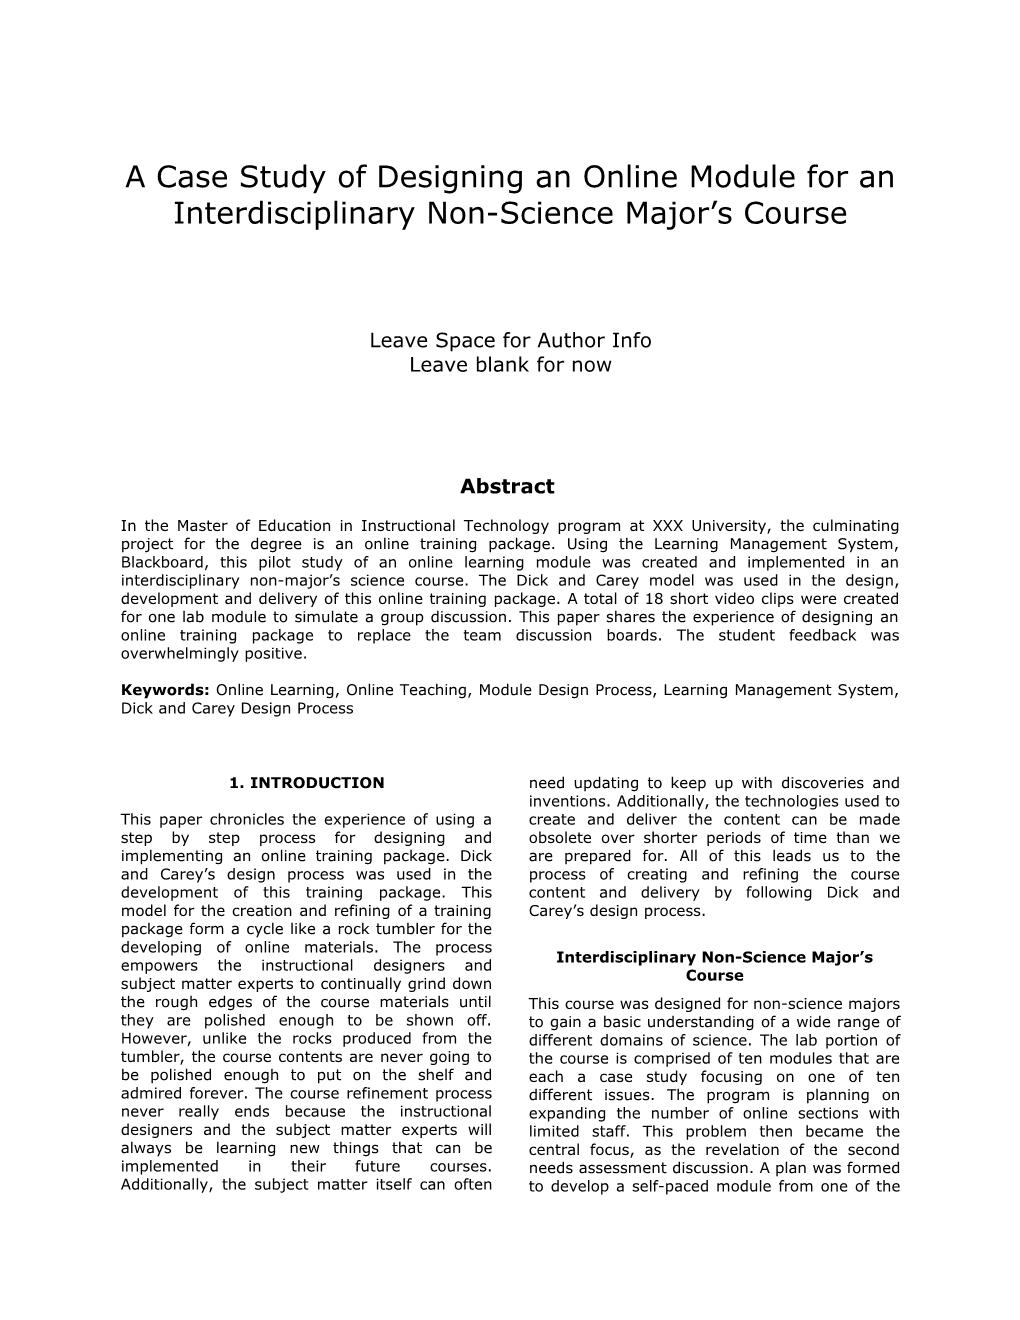 A Case Study of Designing Anonline Module for an Interdisciplinary Non-Science Major S Course